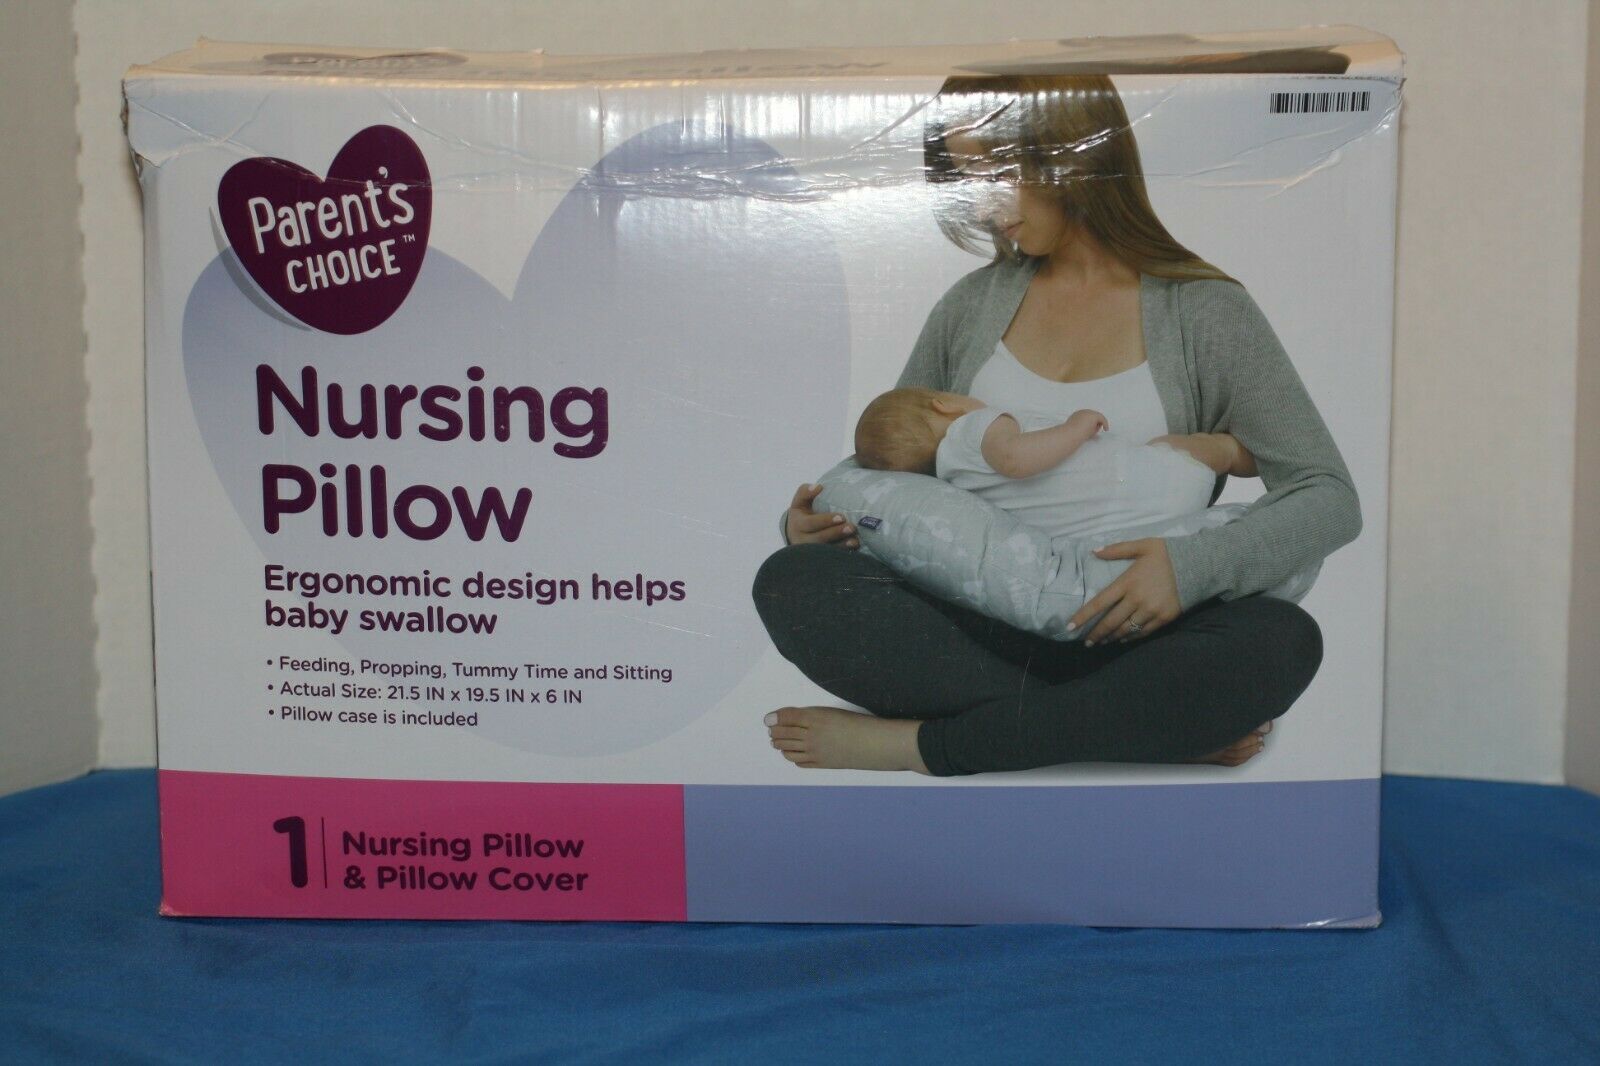 Parent's Choice Nursing Pillow Open Box Contents Still Sealed